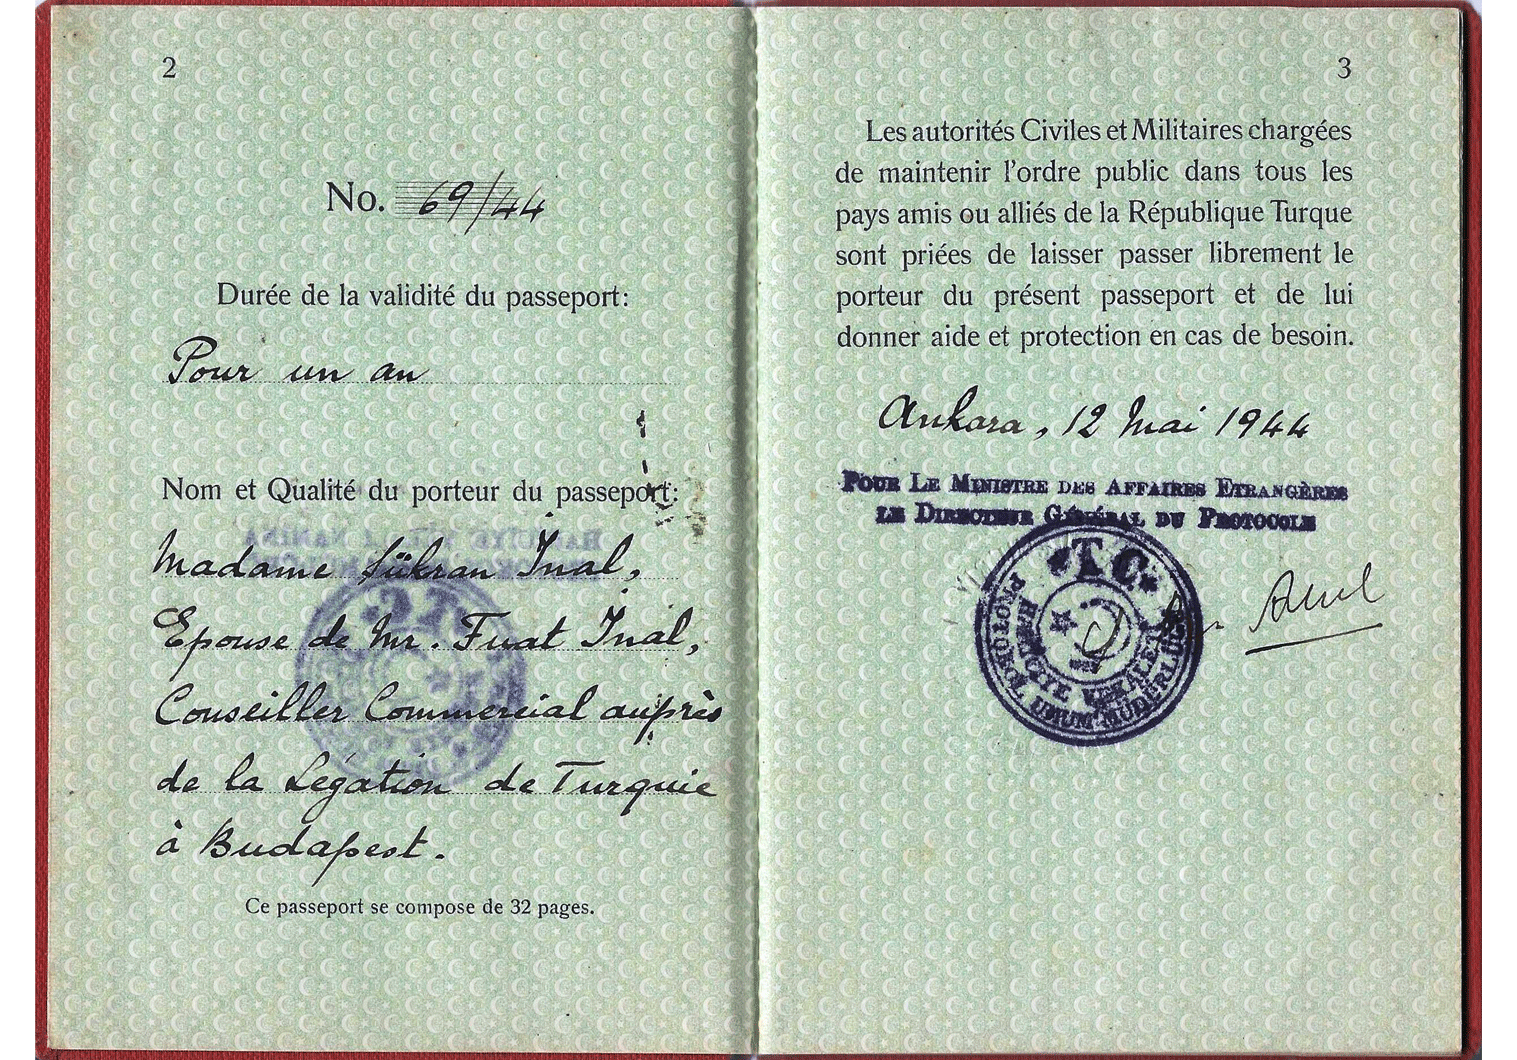 WW2 Diplomatic passport.